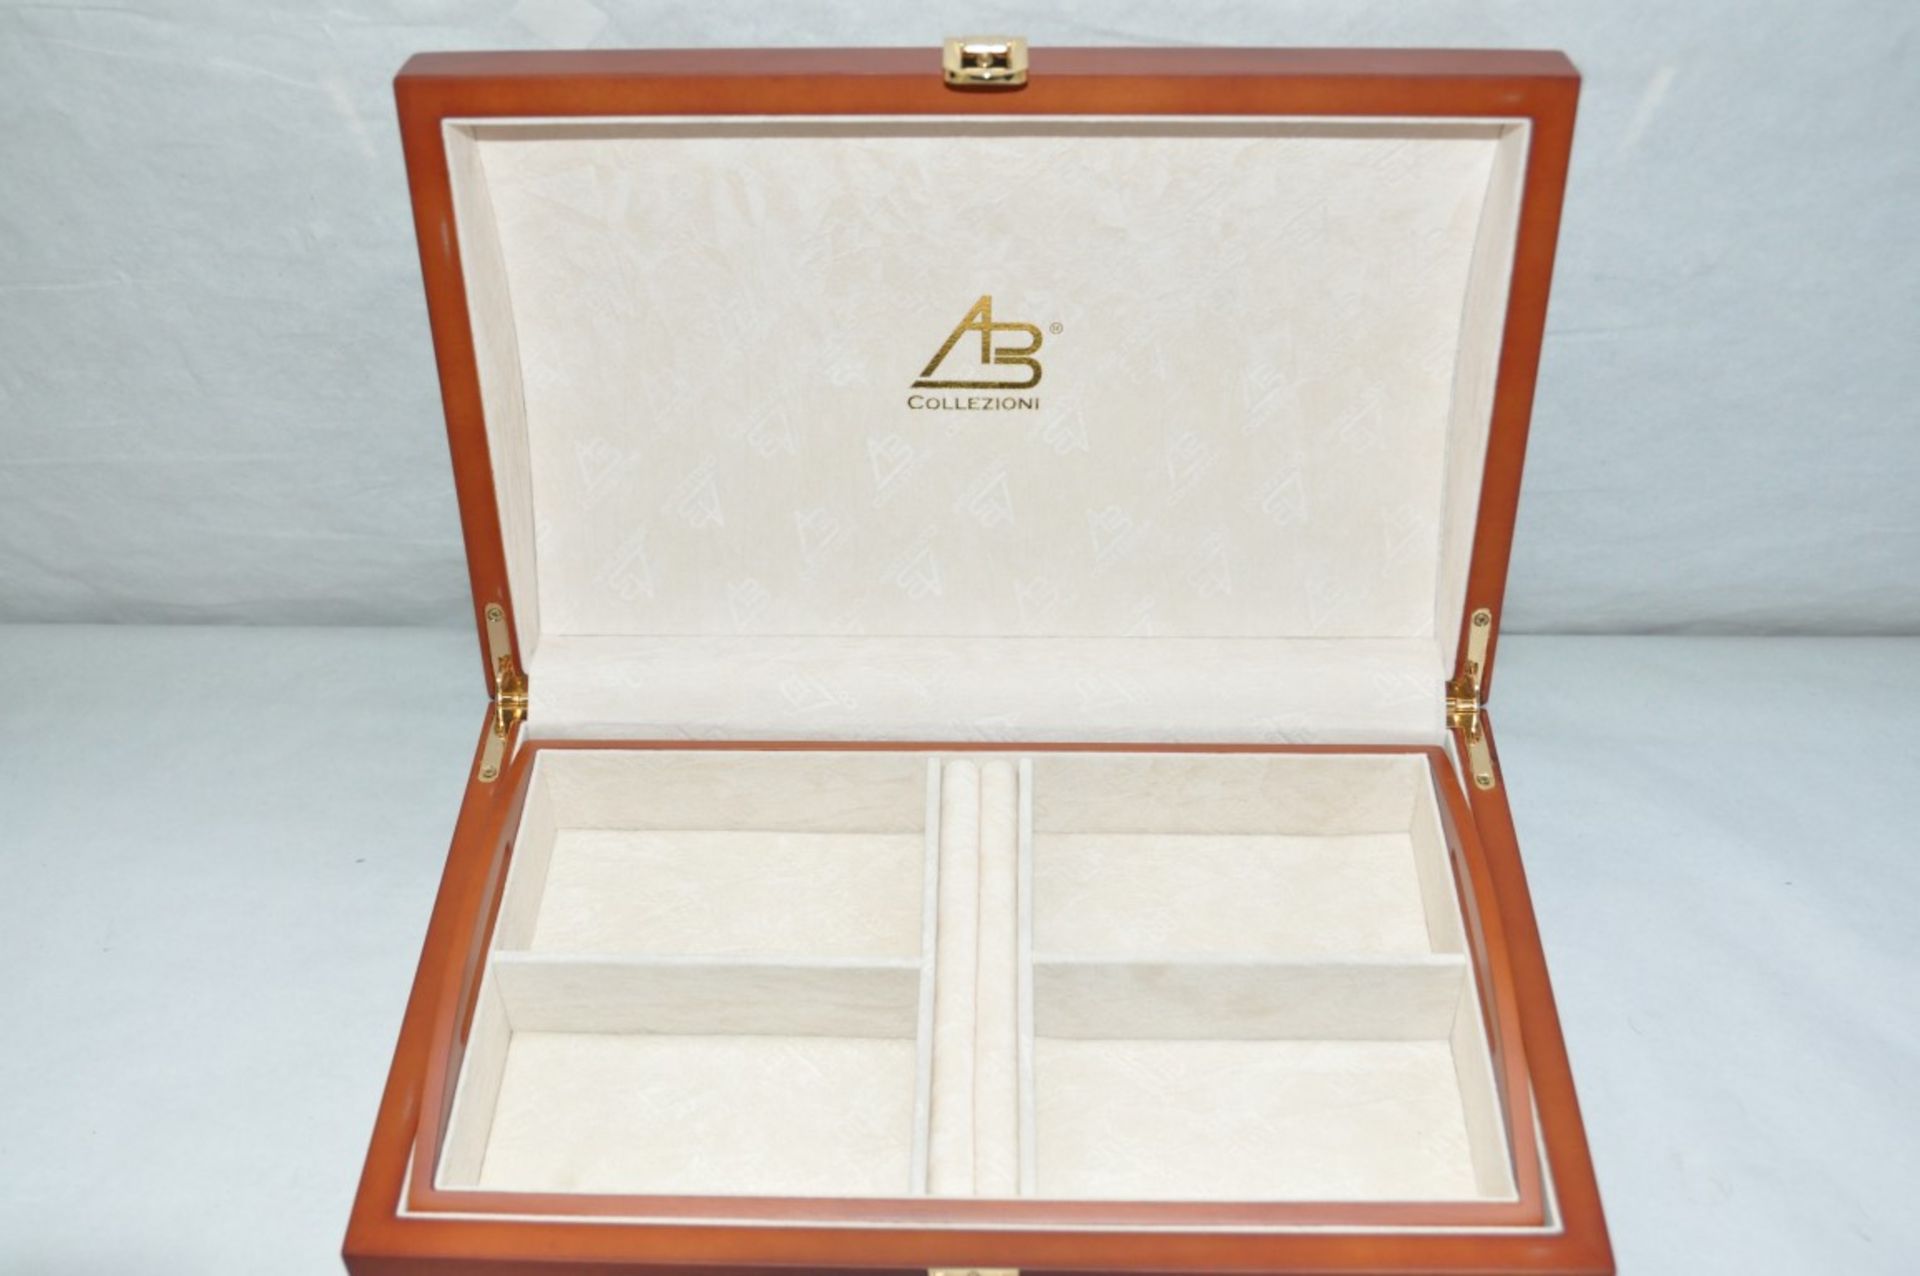 1 x "AB Collezioni" Italian Genuine Leather-Topped Luxury Jewellery Box (WC119W) - Ref LT071 – - Image 8 of 8